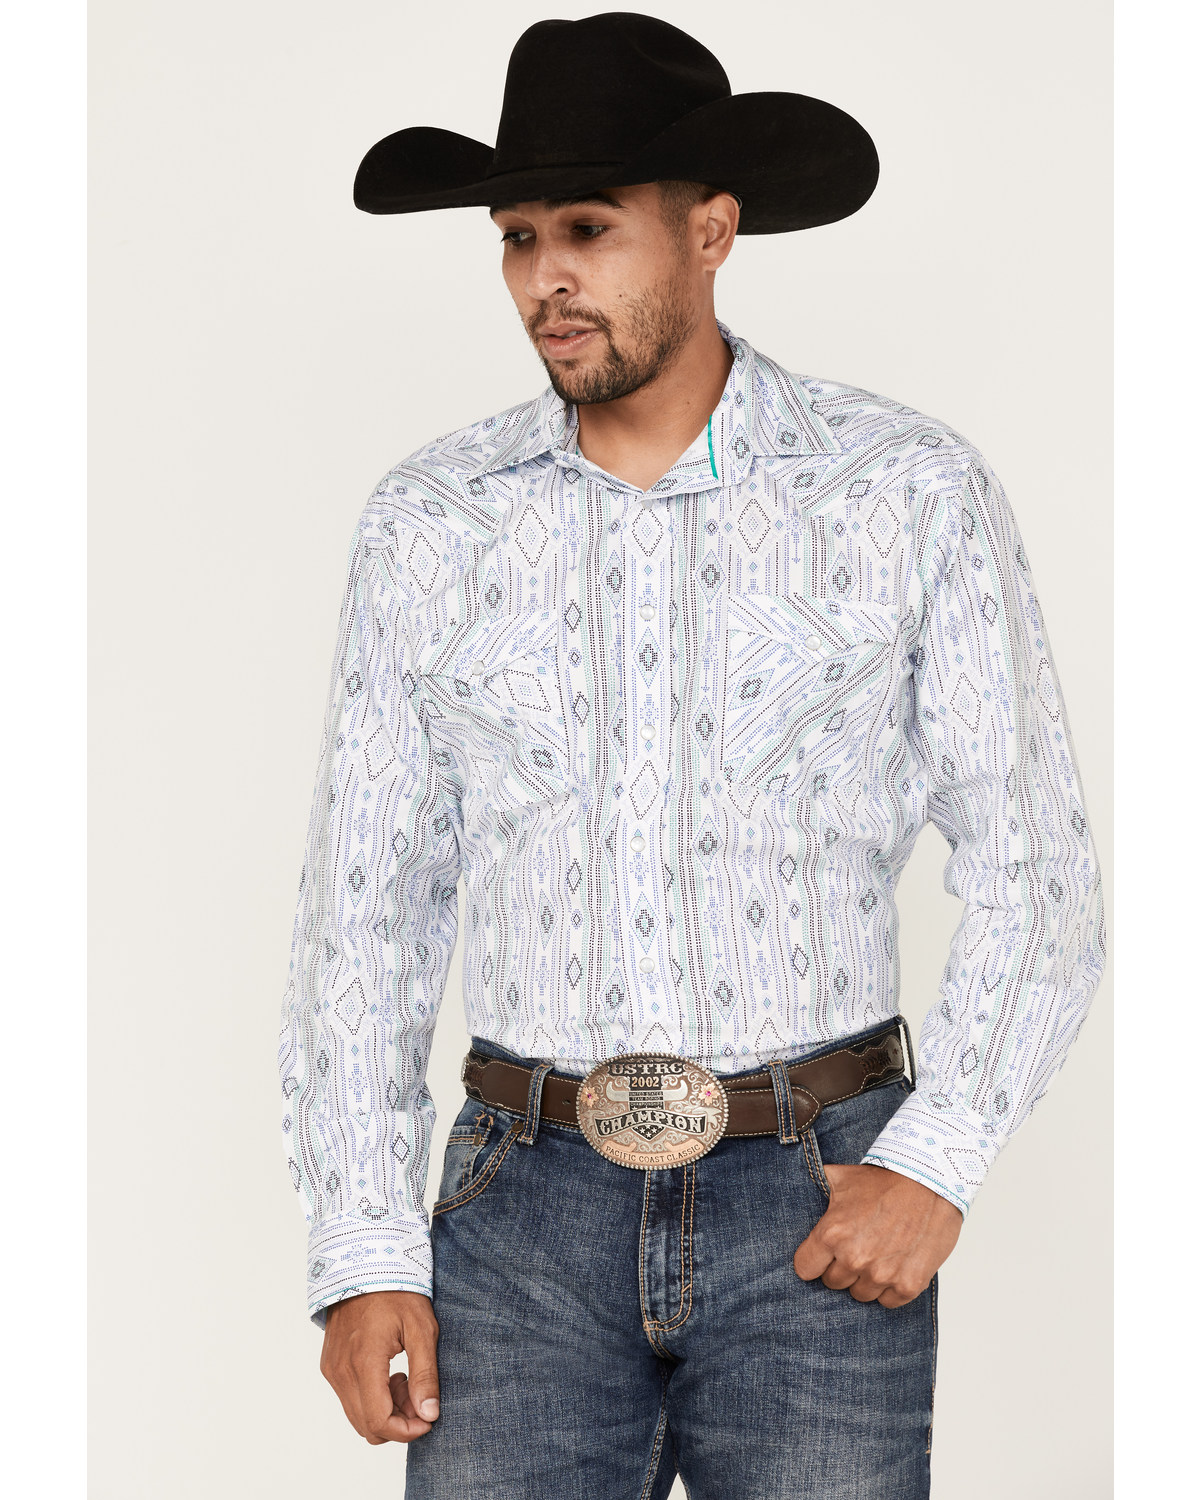 Rough Stock By Panhandle Men's Southwestern Dot Print Long Sleeve Pearl Snap Western Shirt